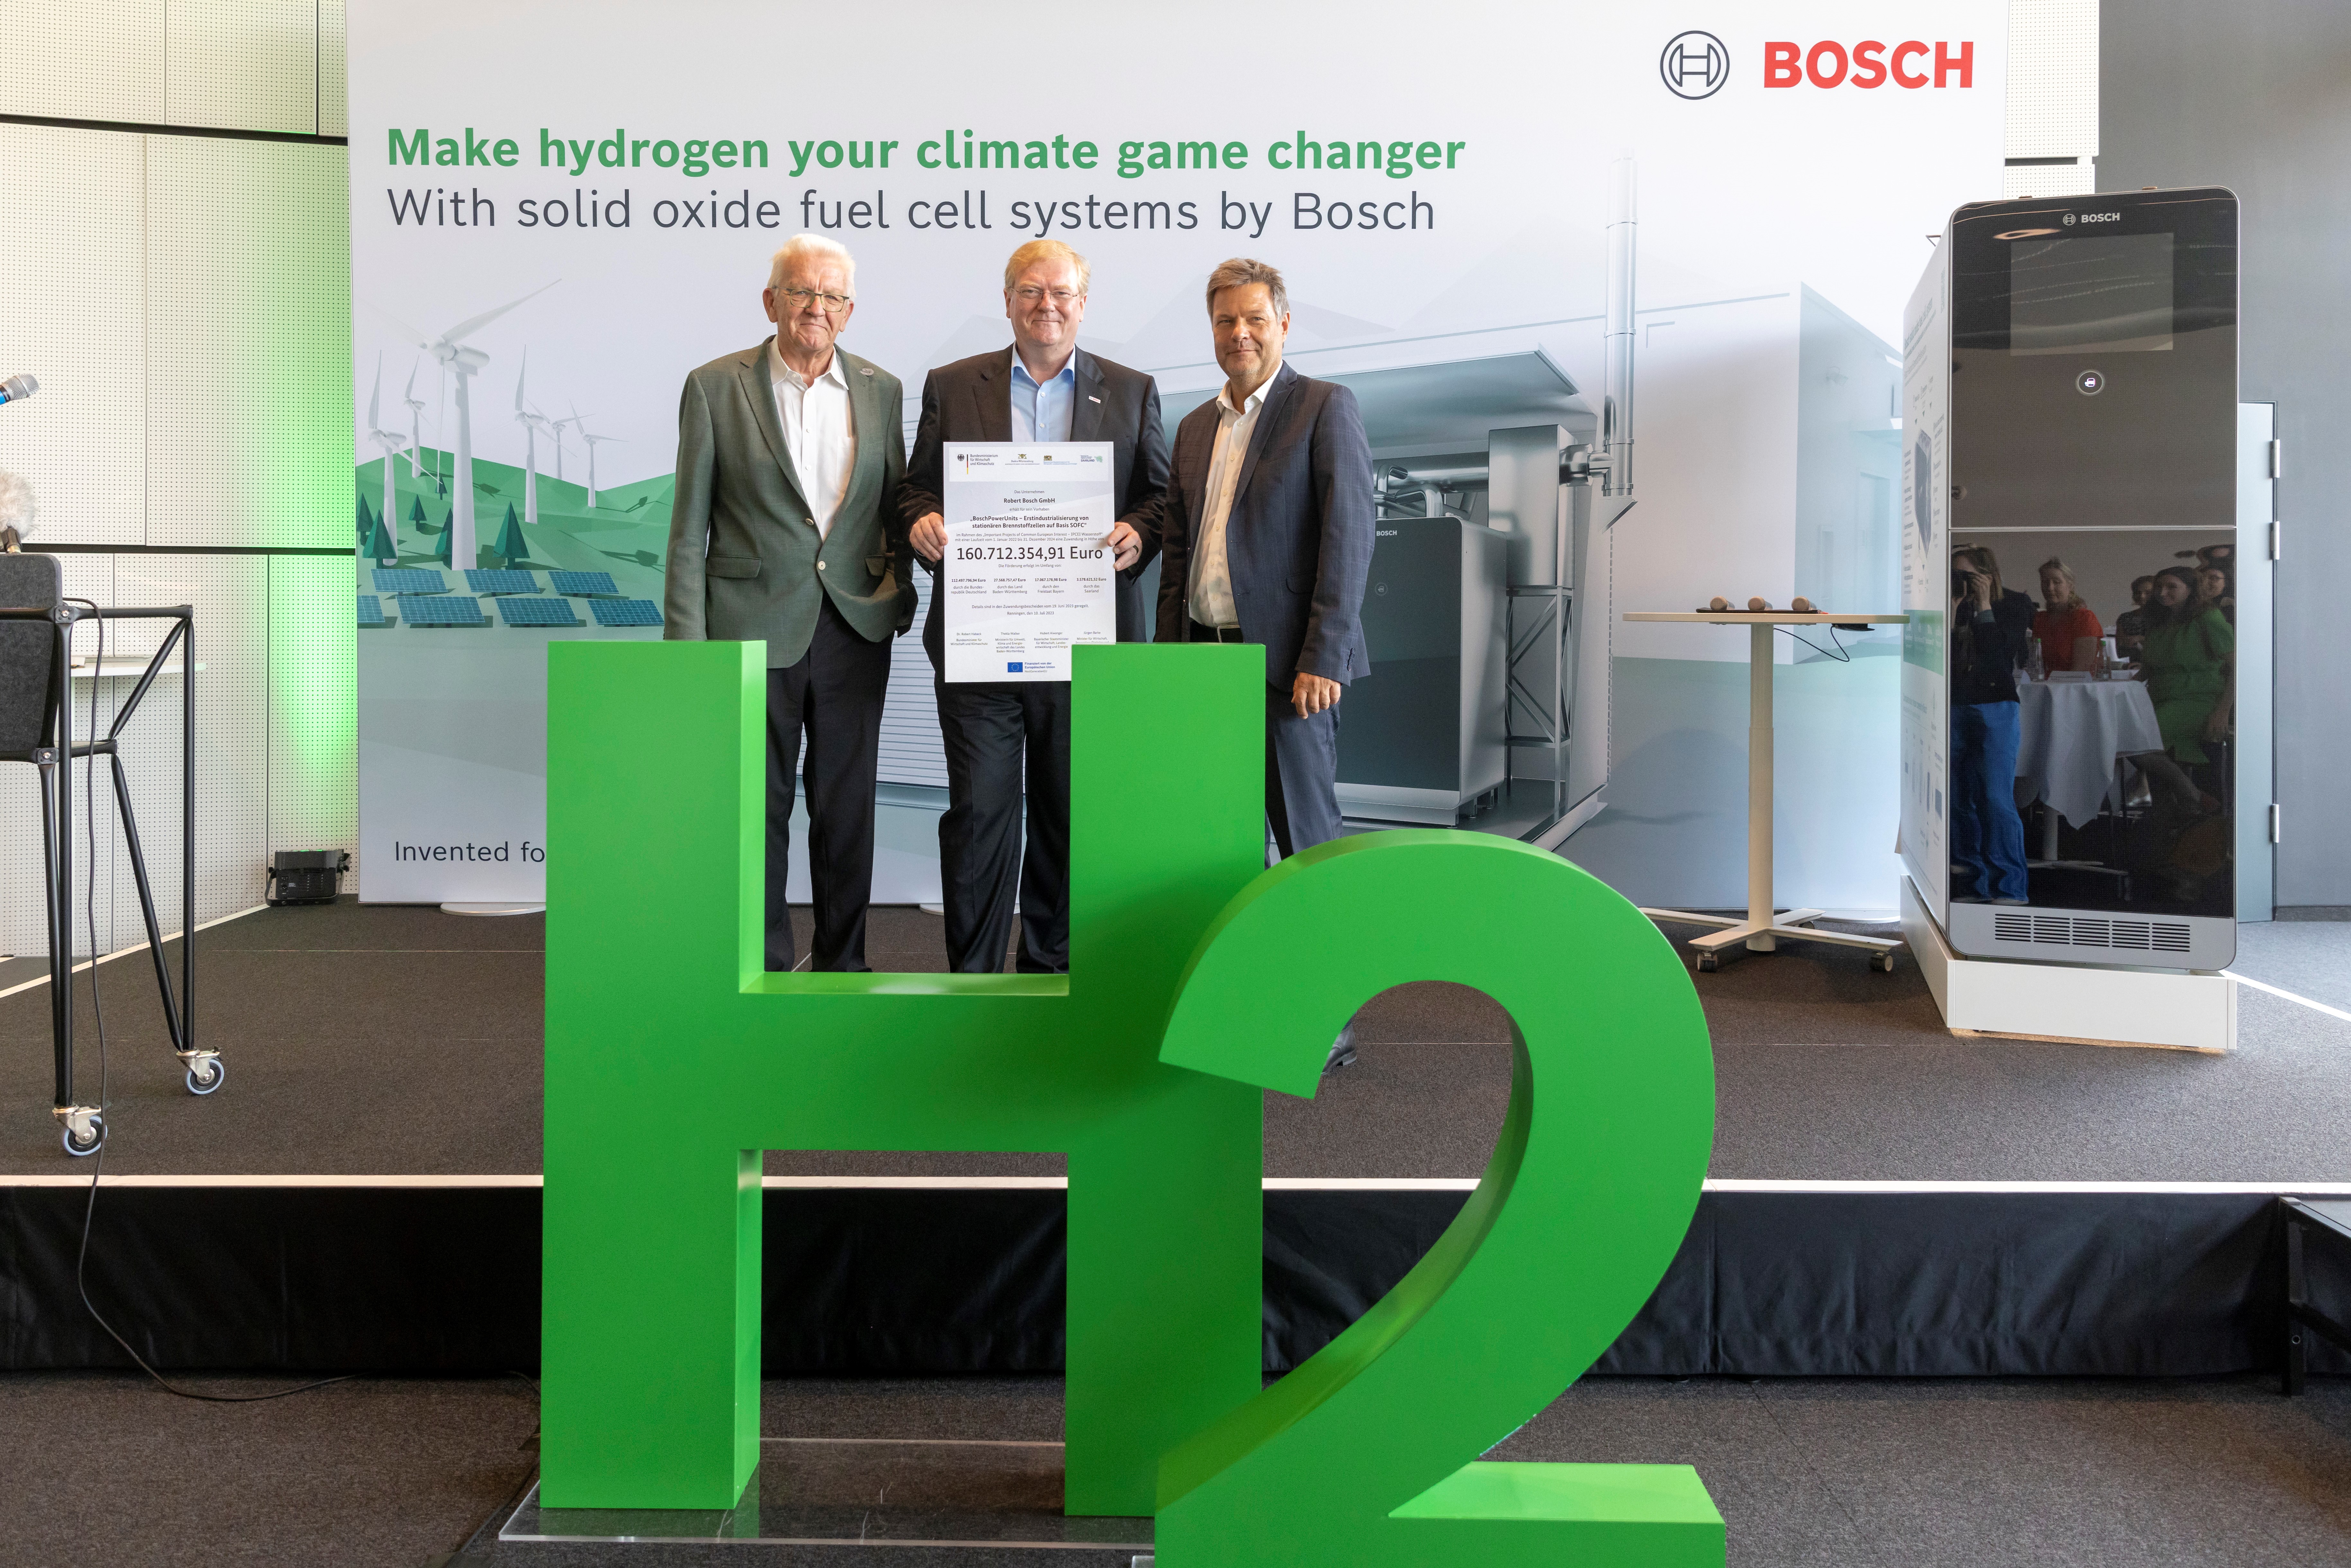 Robert Habeck, federal minister for economic affairs visits Bosch in Renningen.